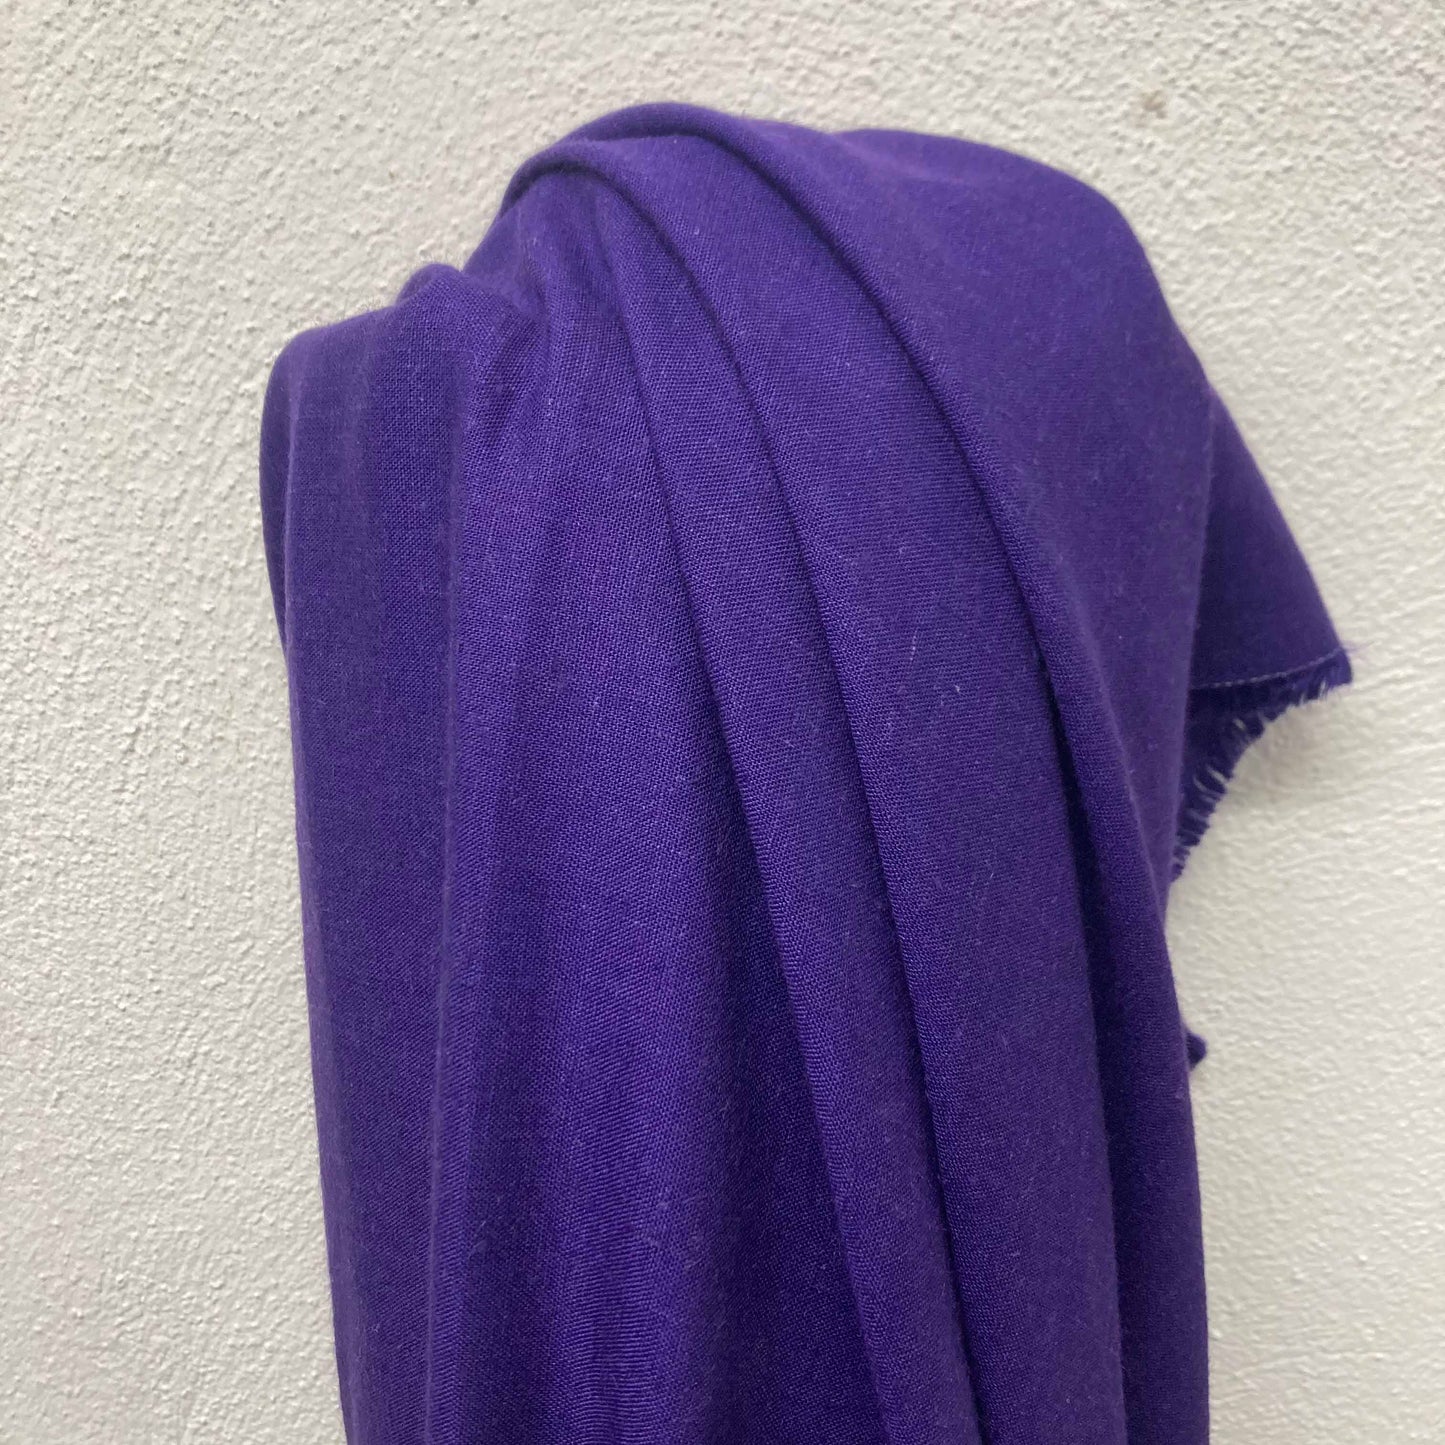 'Linen Look' fabric - Purple